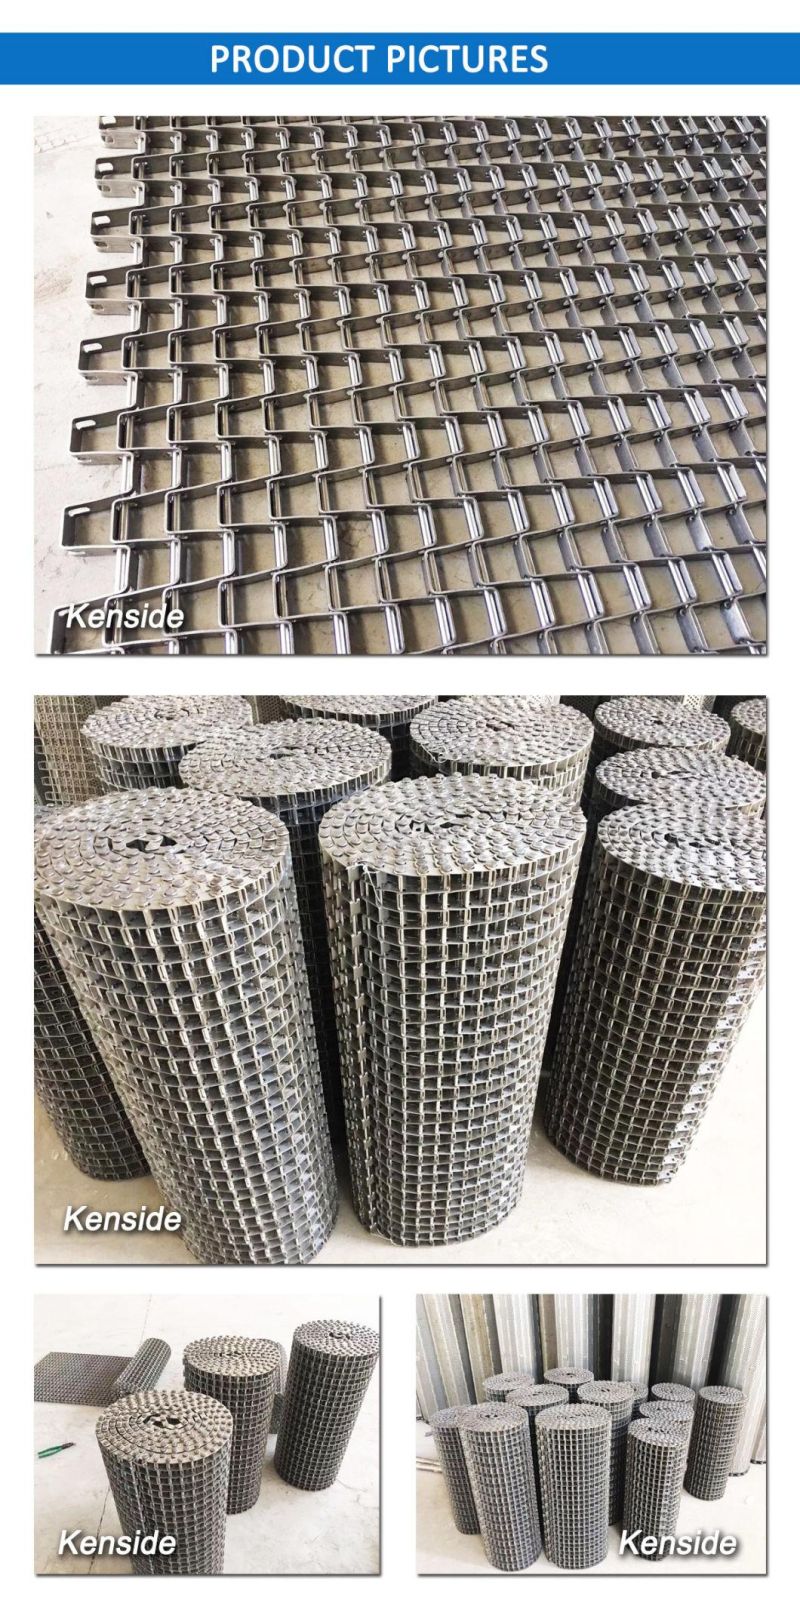 Honeycomb Conveyor Belt for Furnace